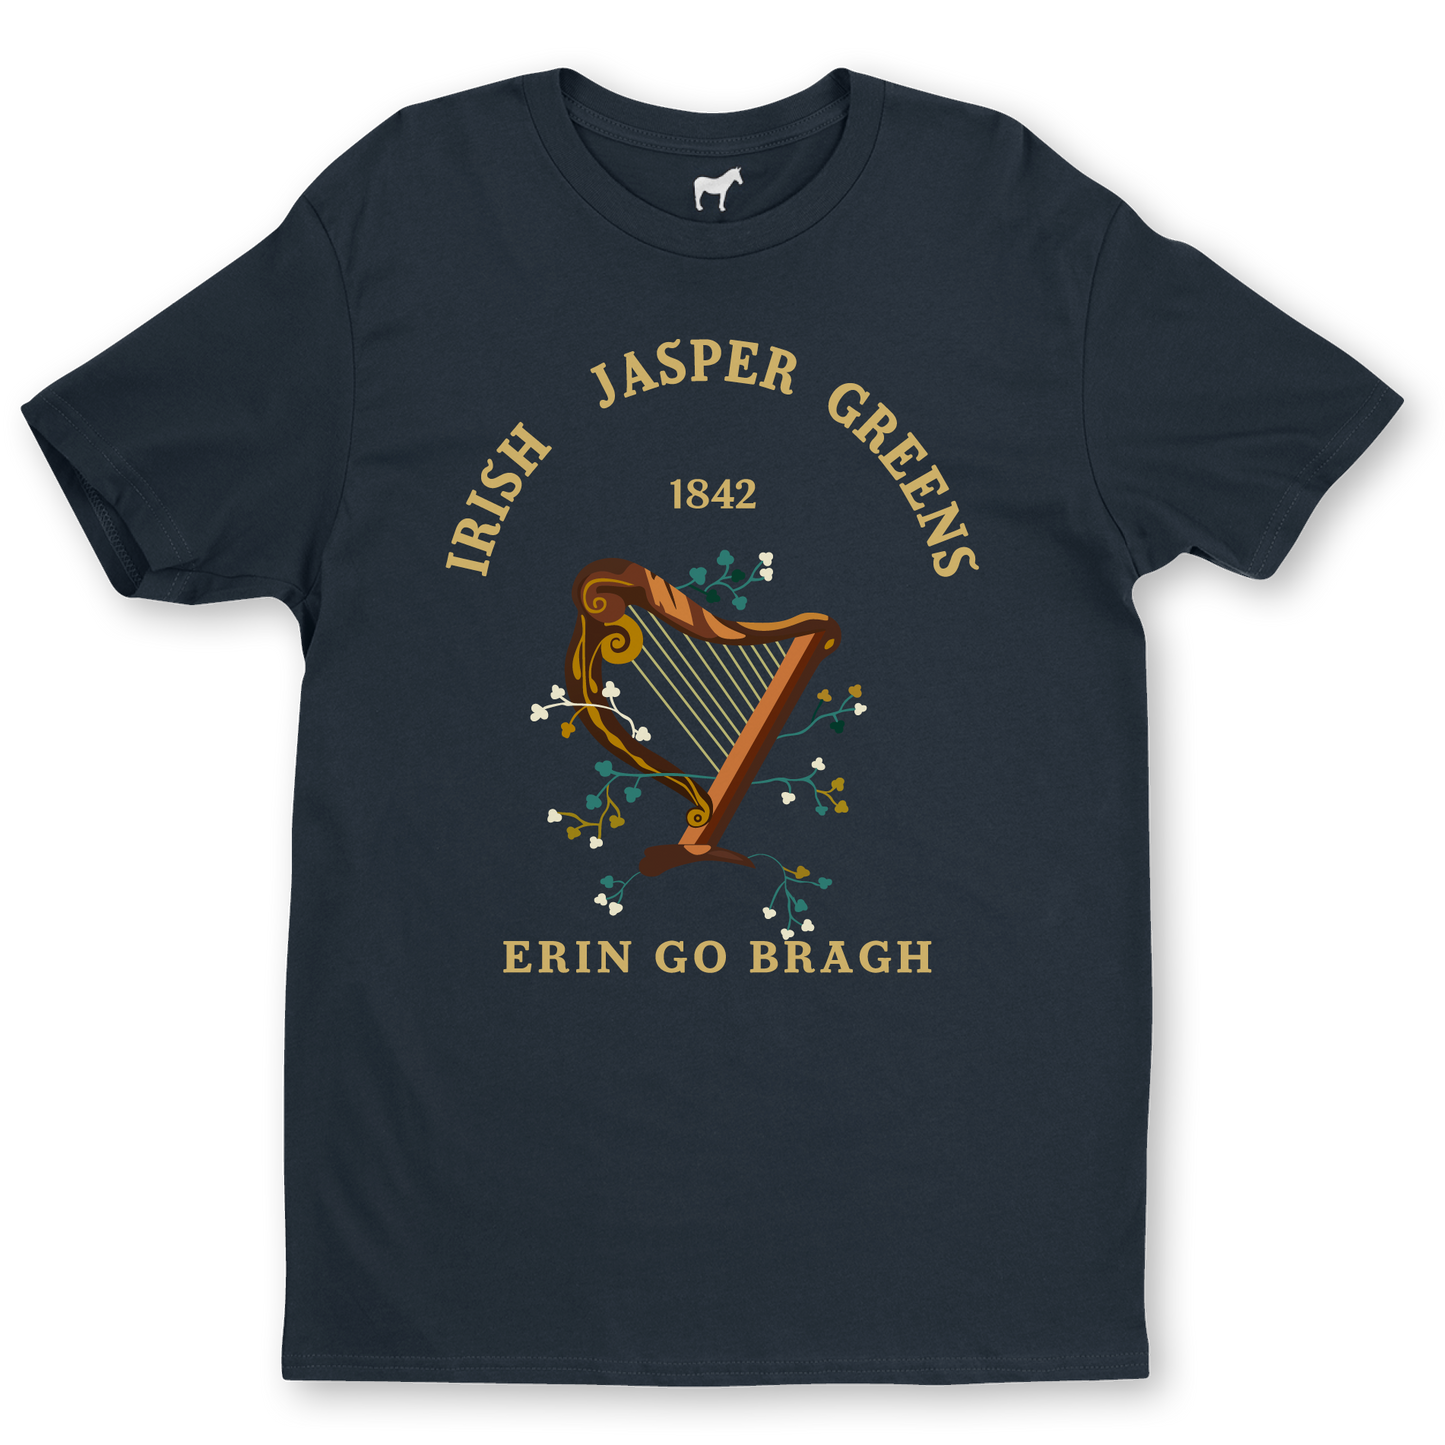 Irish Jasper Greens Shirt